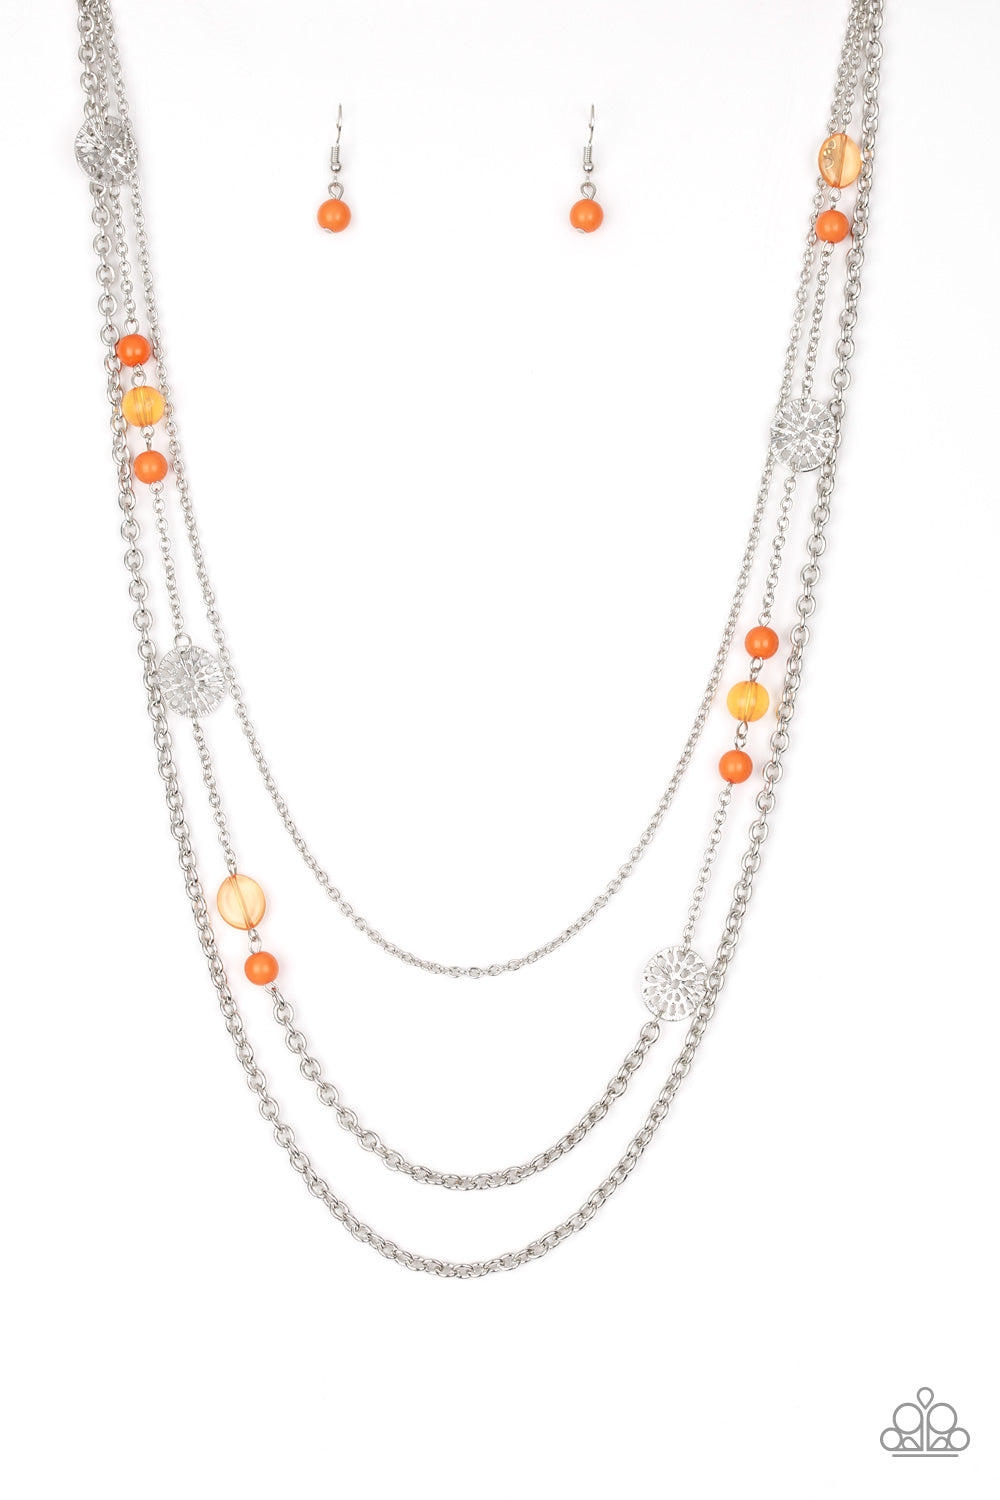 Paparazzi necklace - Pretty Pop-tastic! - Orange